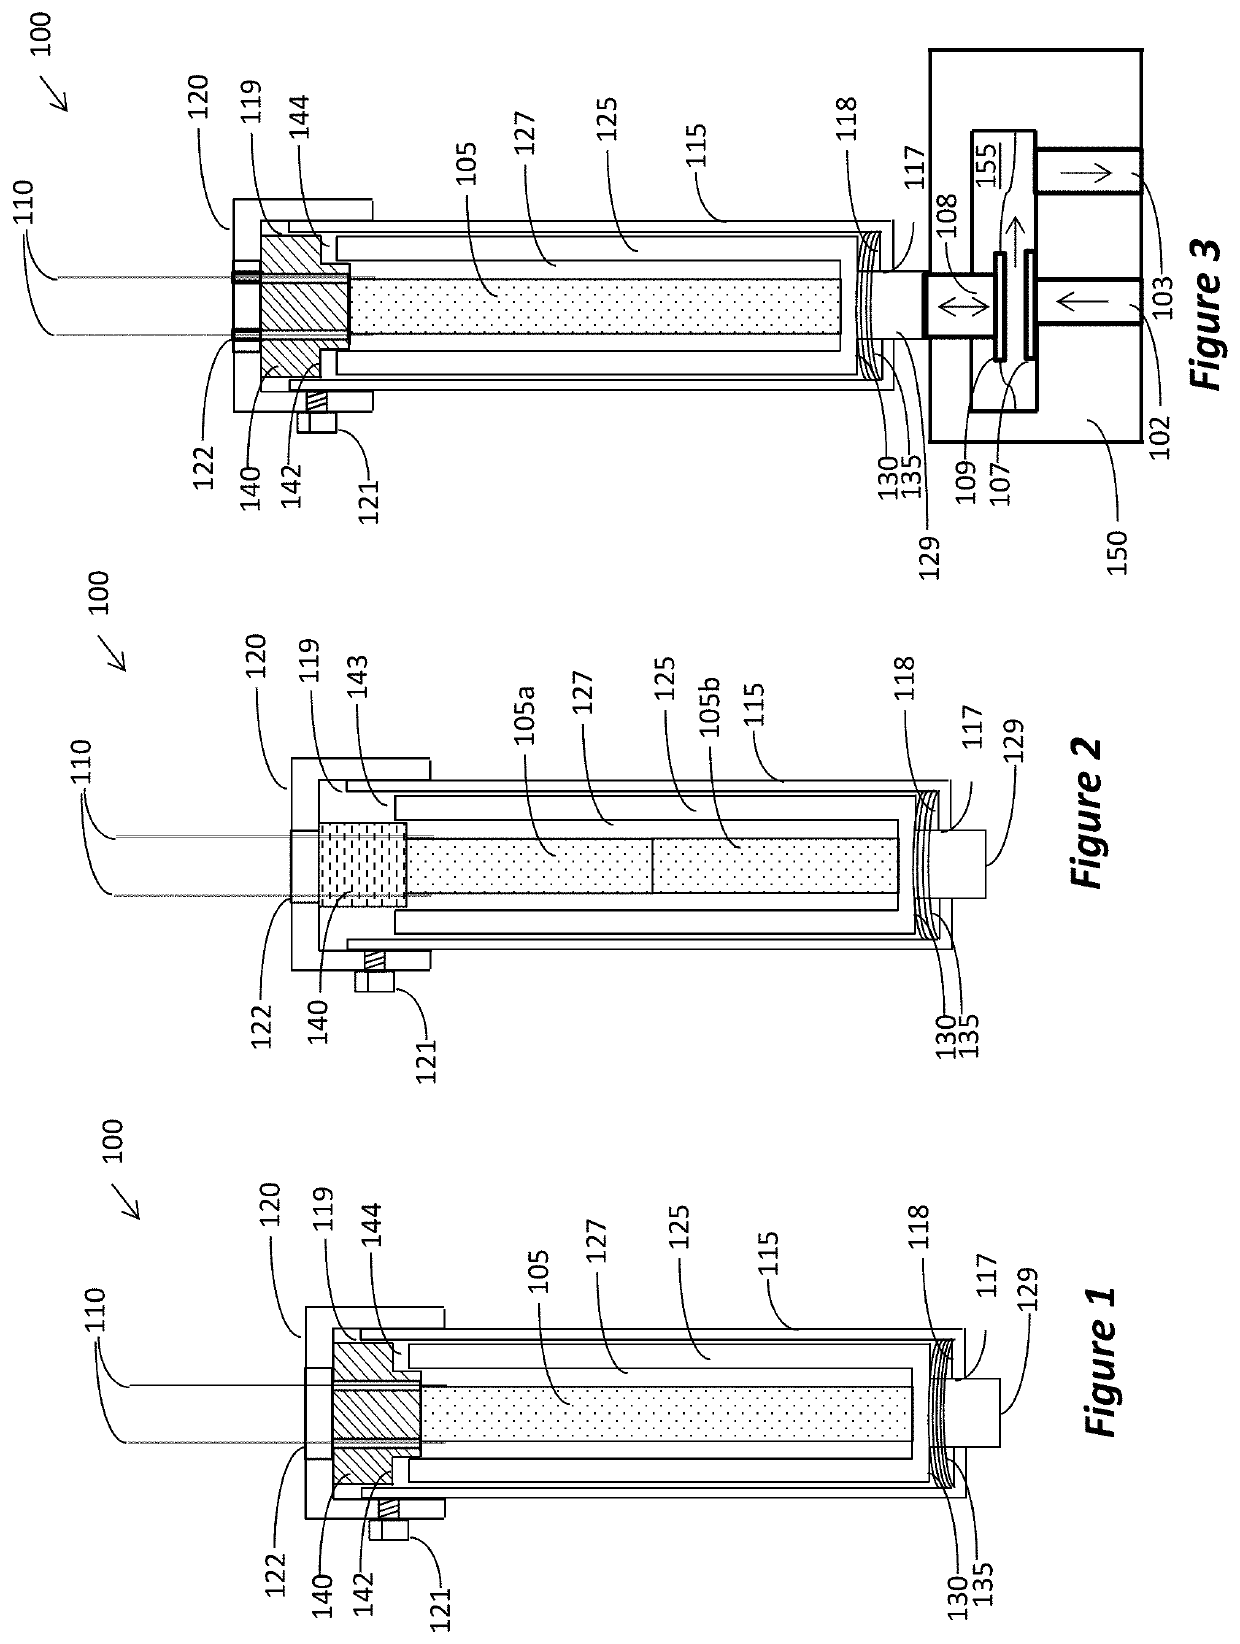 Preloaded piezo actuator and gas valve employing the actuator